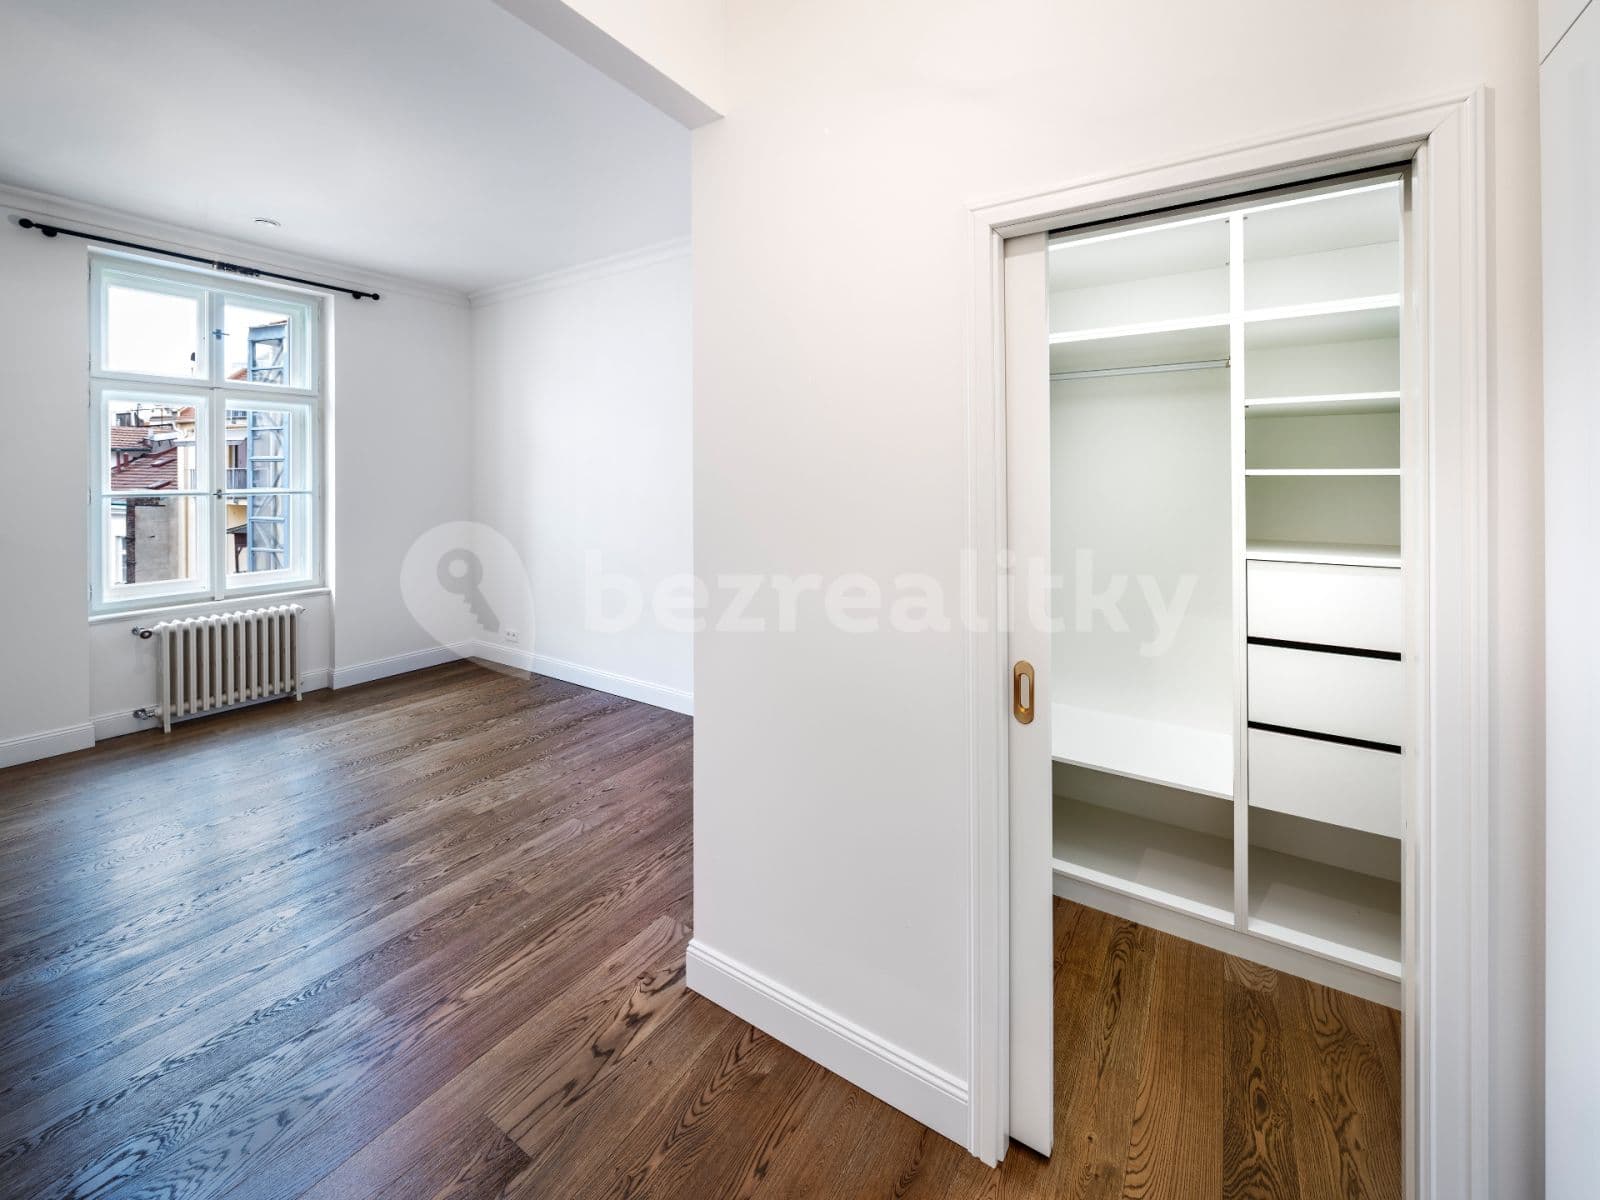 2 bedroom with open-plan kitchen flat to rent, 112 m², Milady Horákové, Prague, Prague